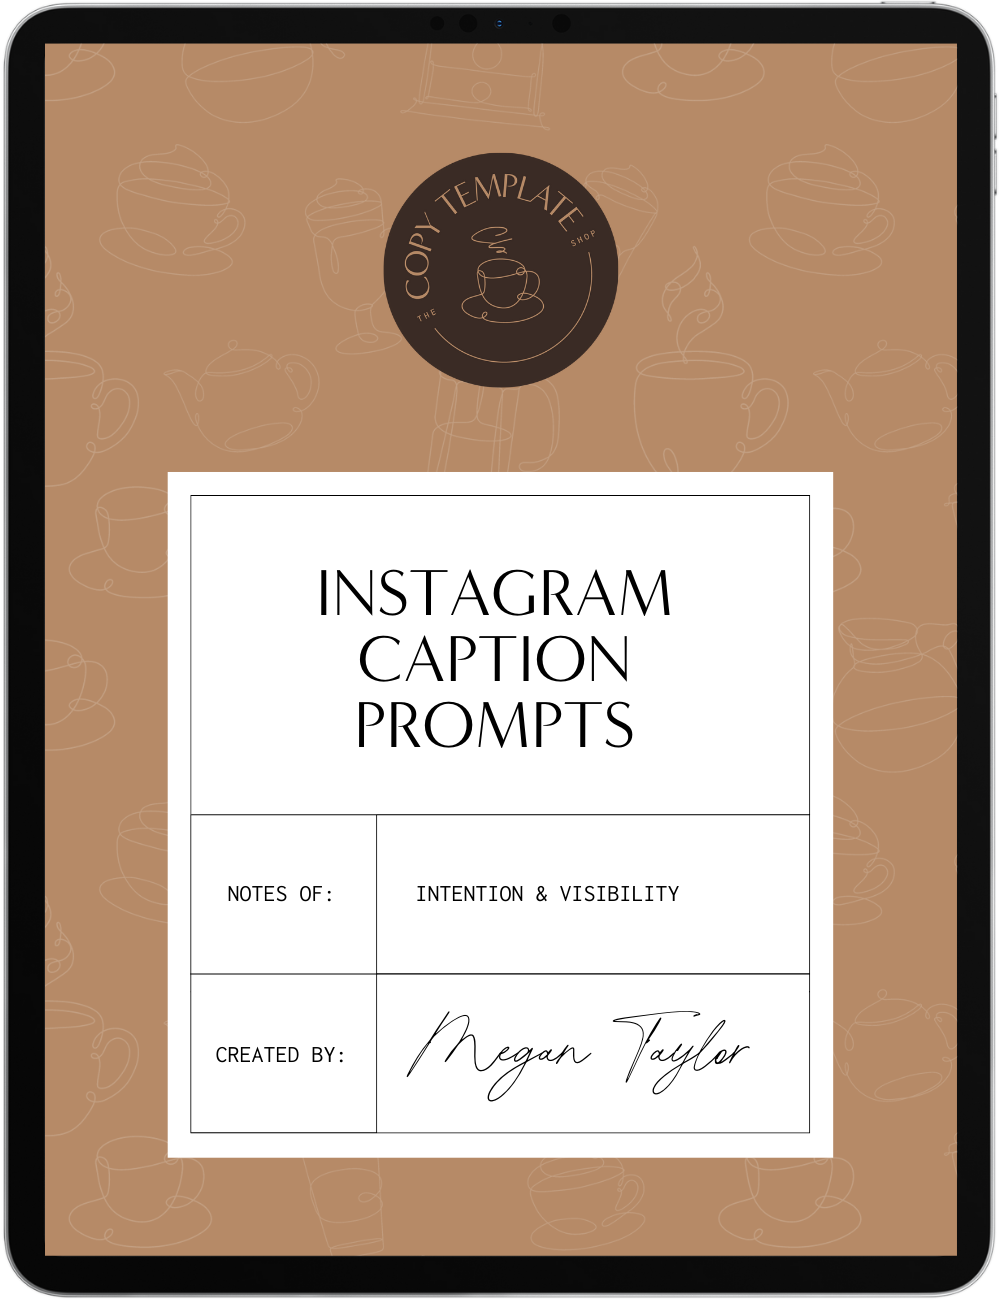 instagram caption prompts shown on a tablet